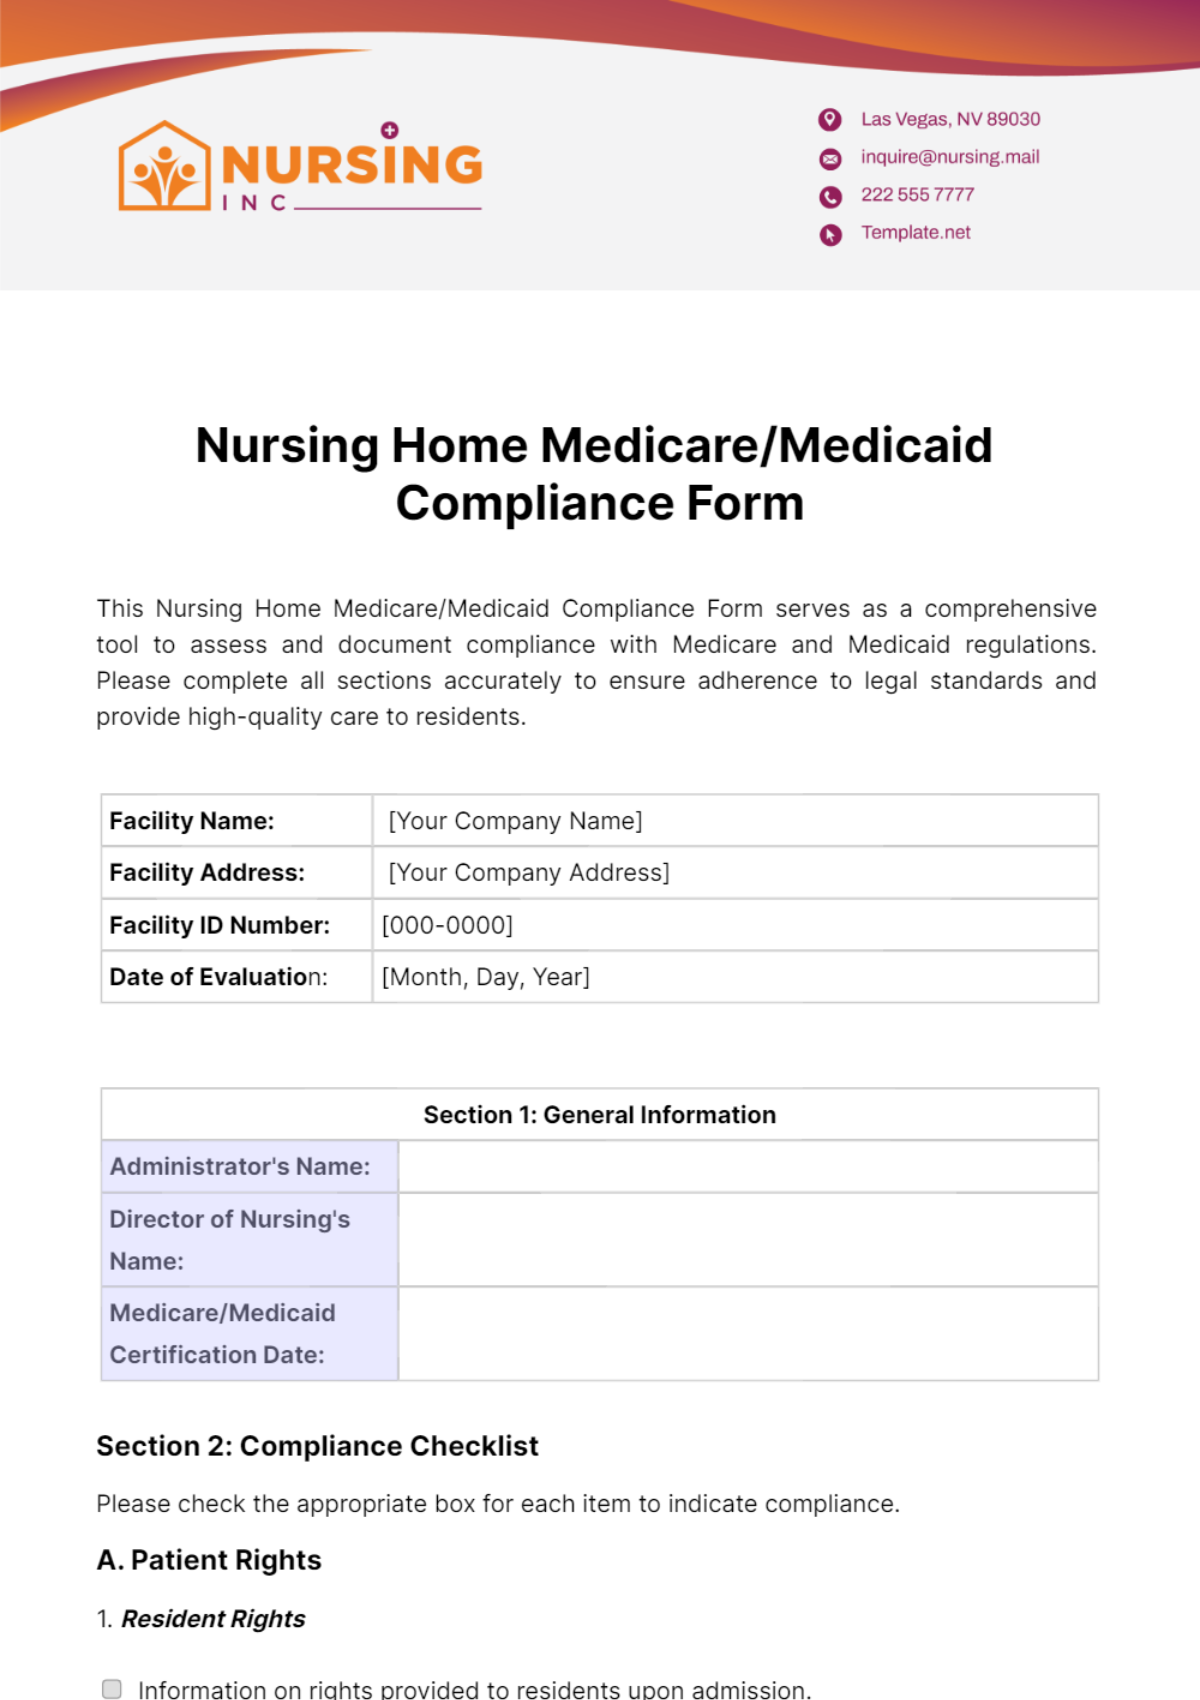 Nursing Home Medicare/Medicaid Compliance Form Template